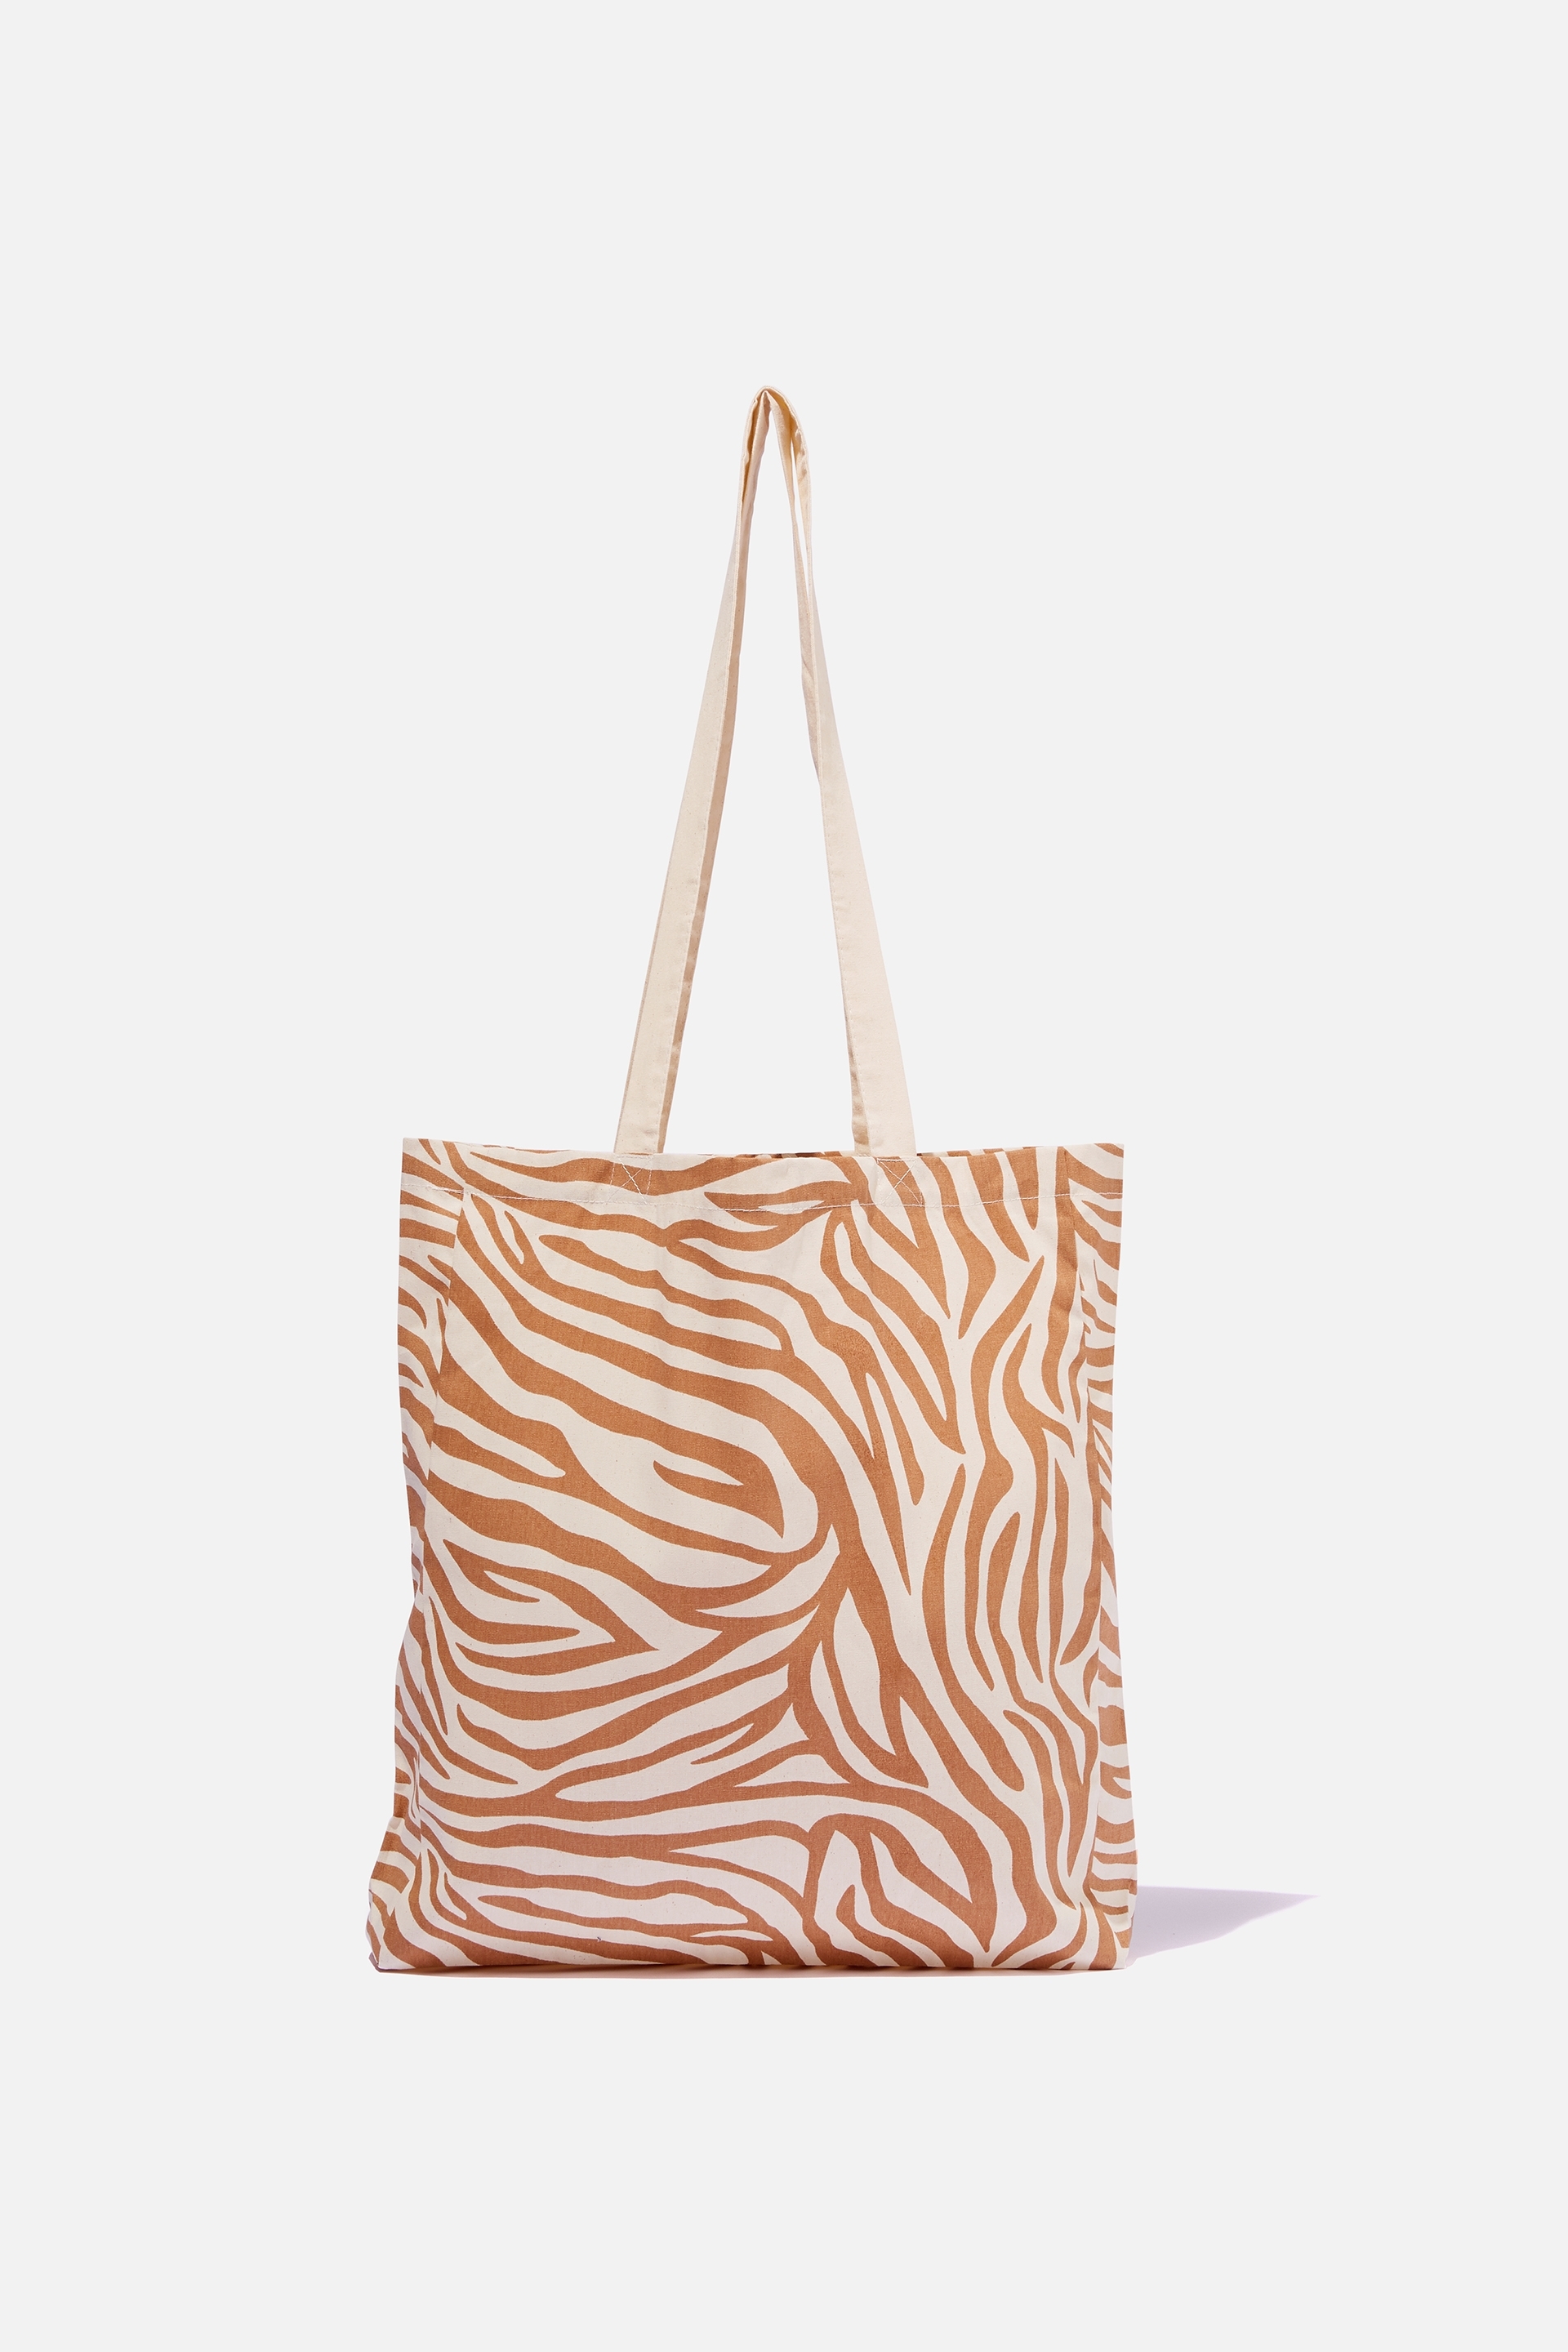 Cotton On Foundation - Foundation Supre Organic Tote Bag - Brown zebra print